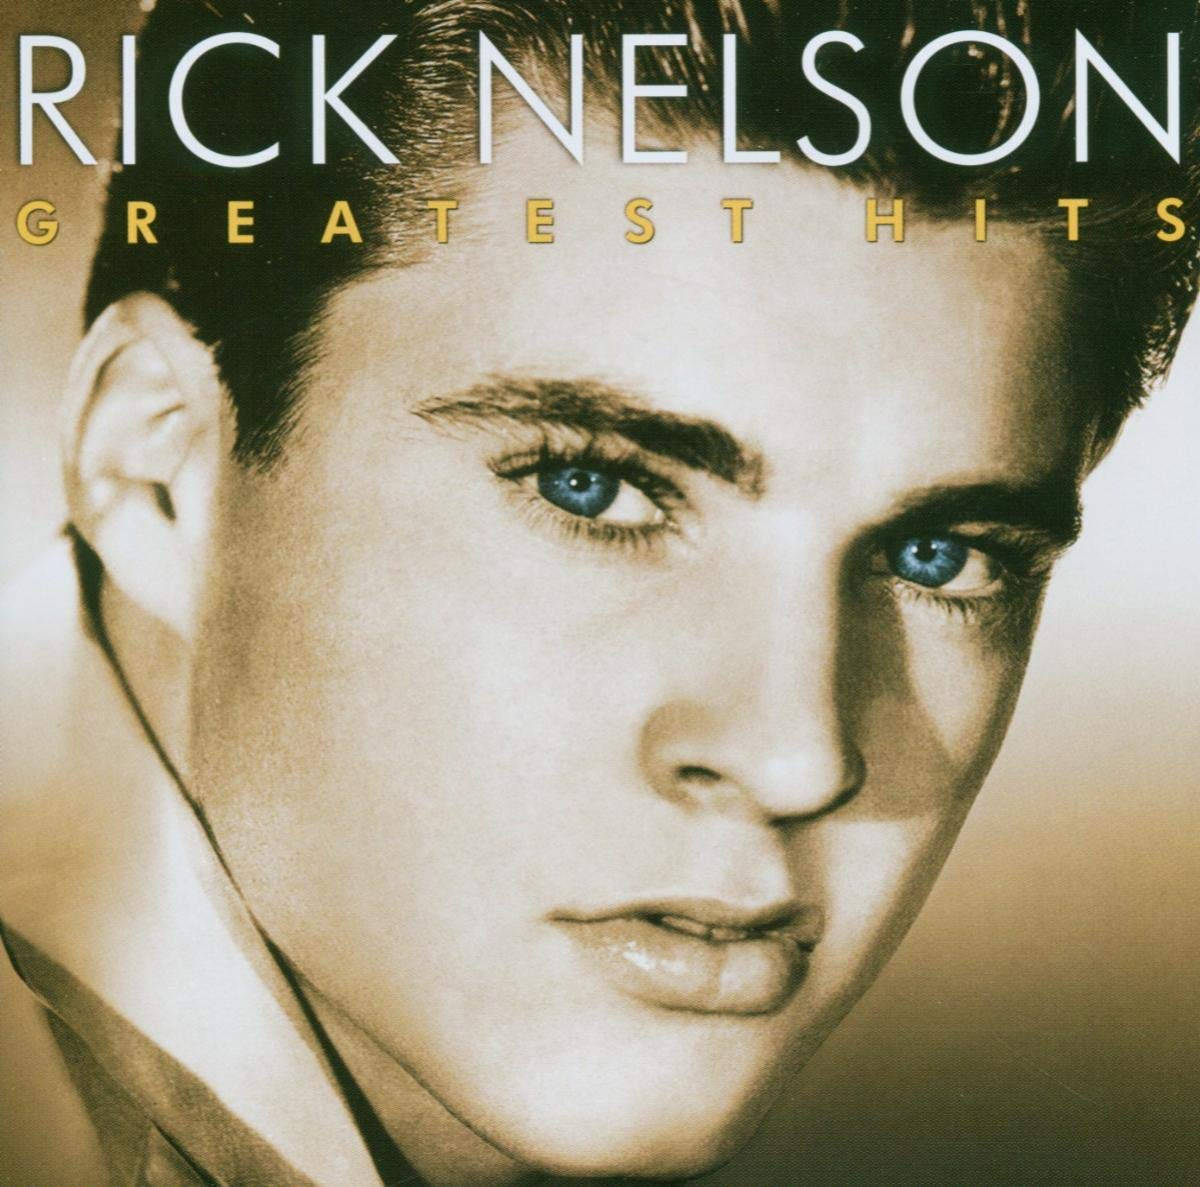 Rick Nelson - Größte Hits 2002 Album Cover Wallpaper